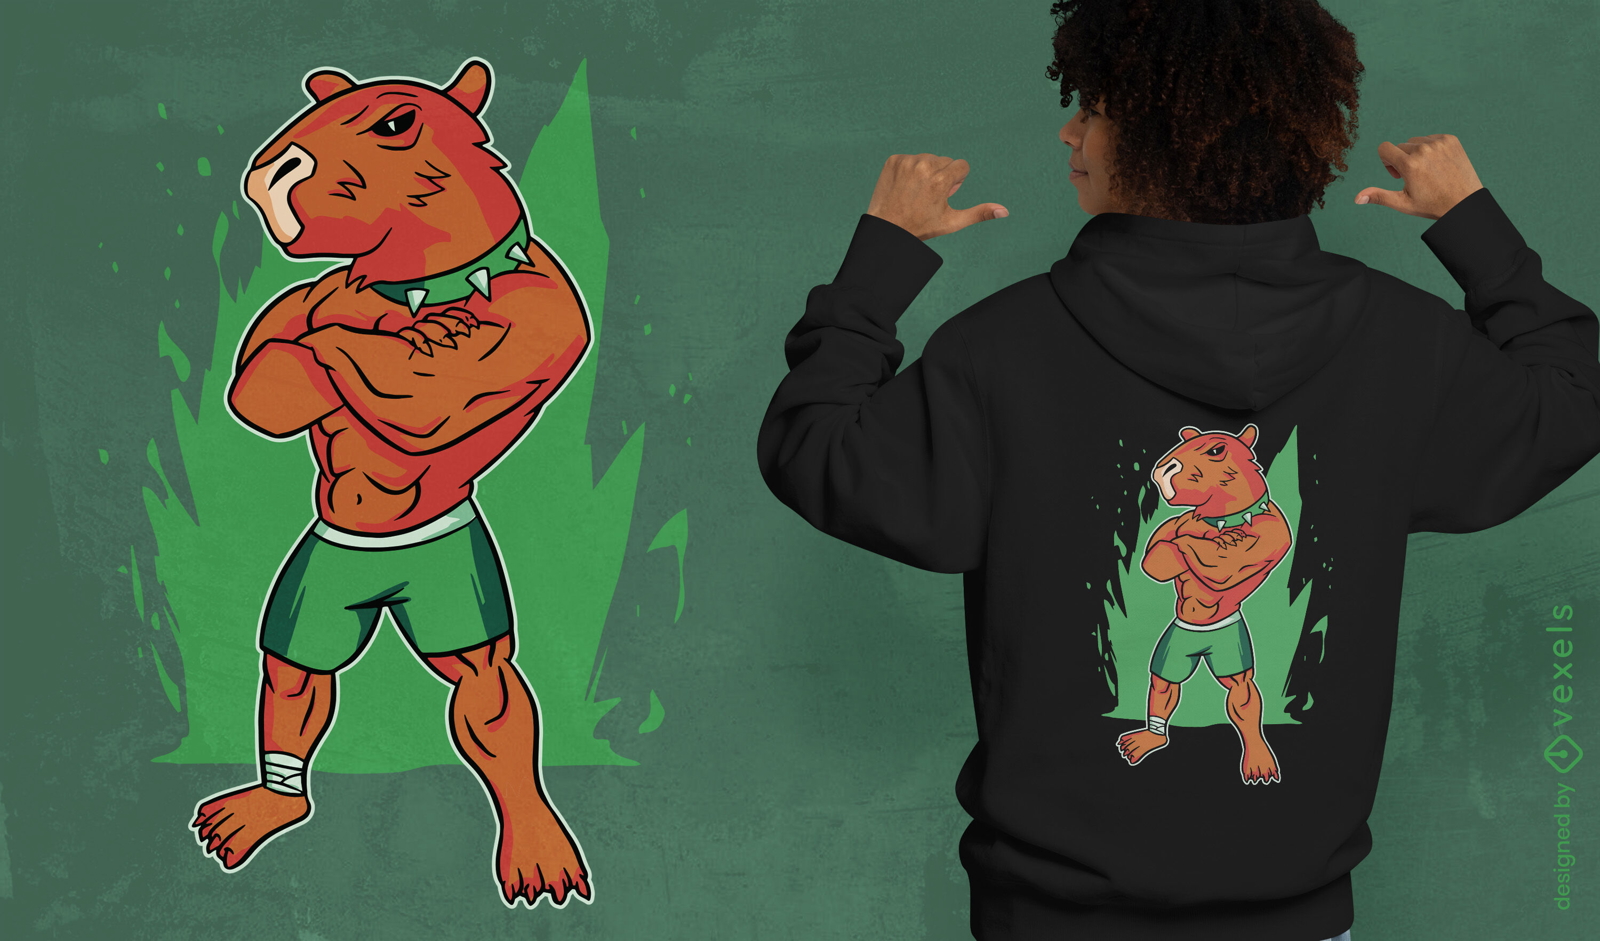 Capybara animal with muscles t-shirt design